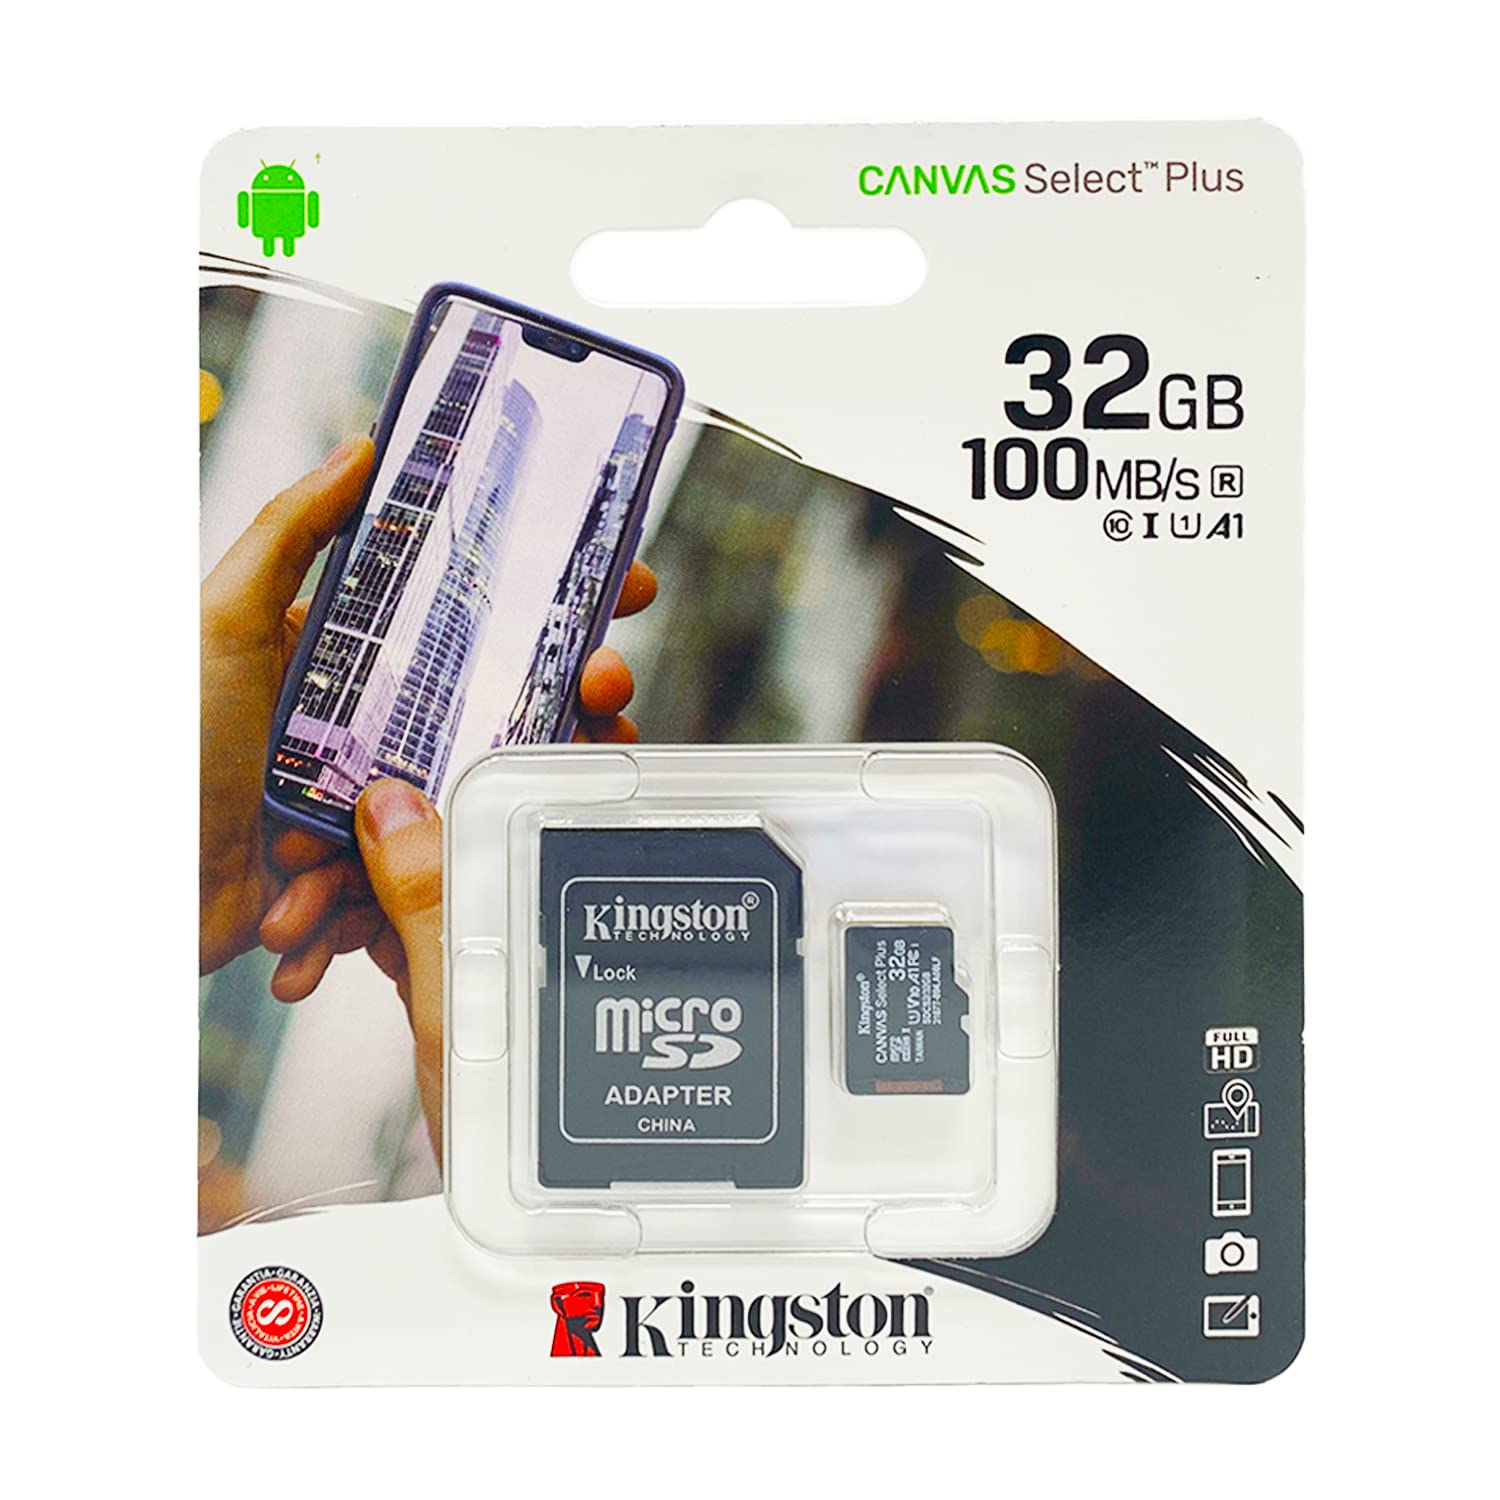 Canon camera memory card in a computer slot.